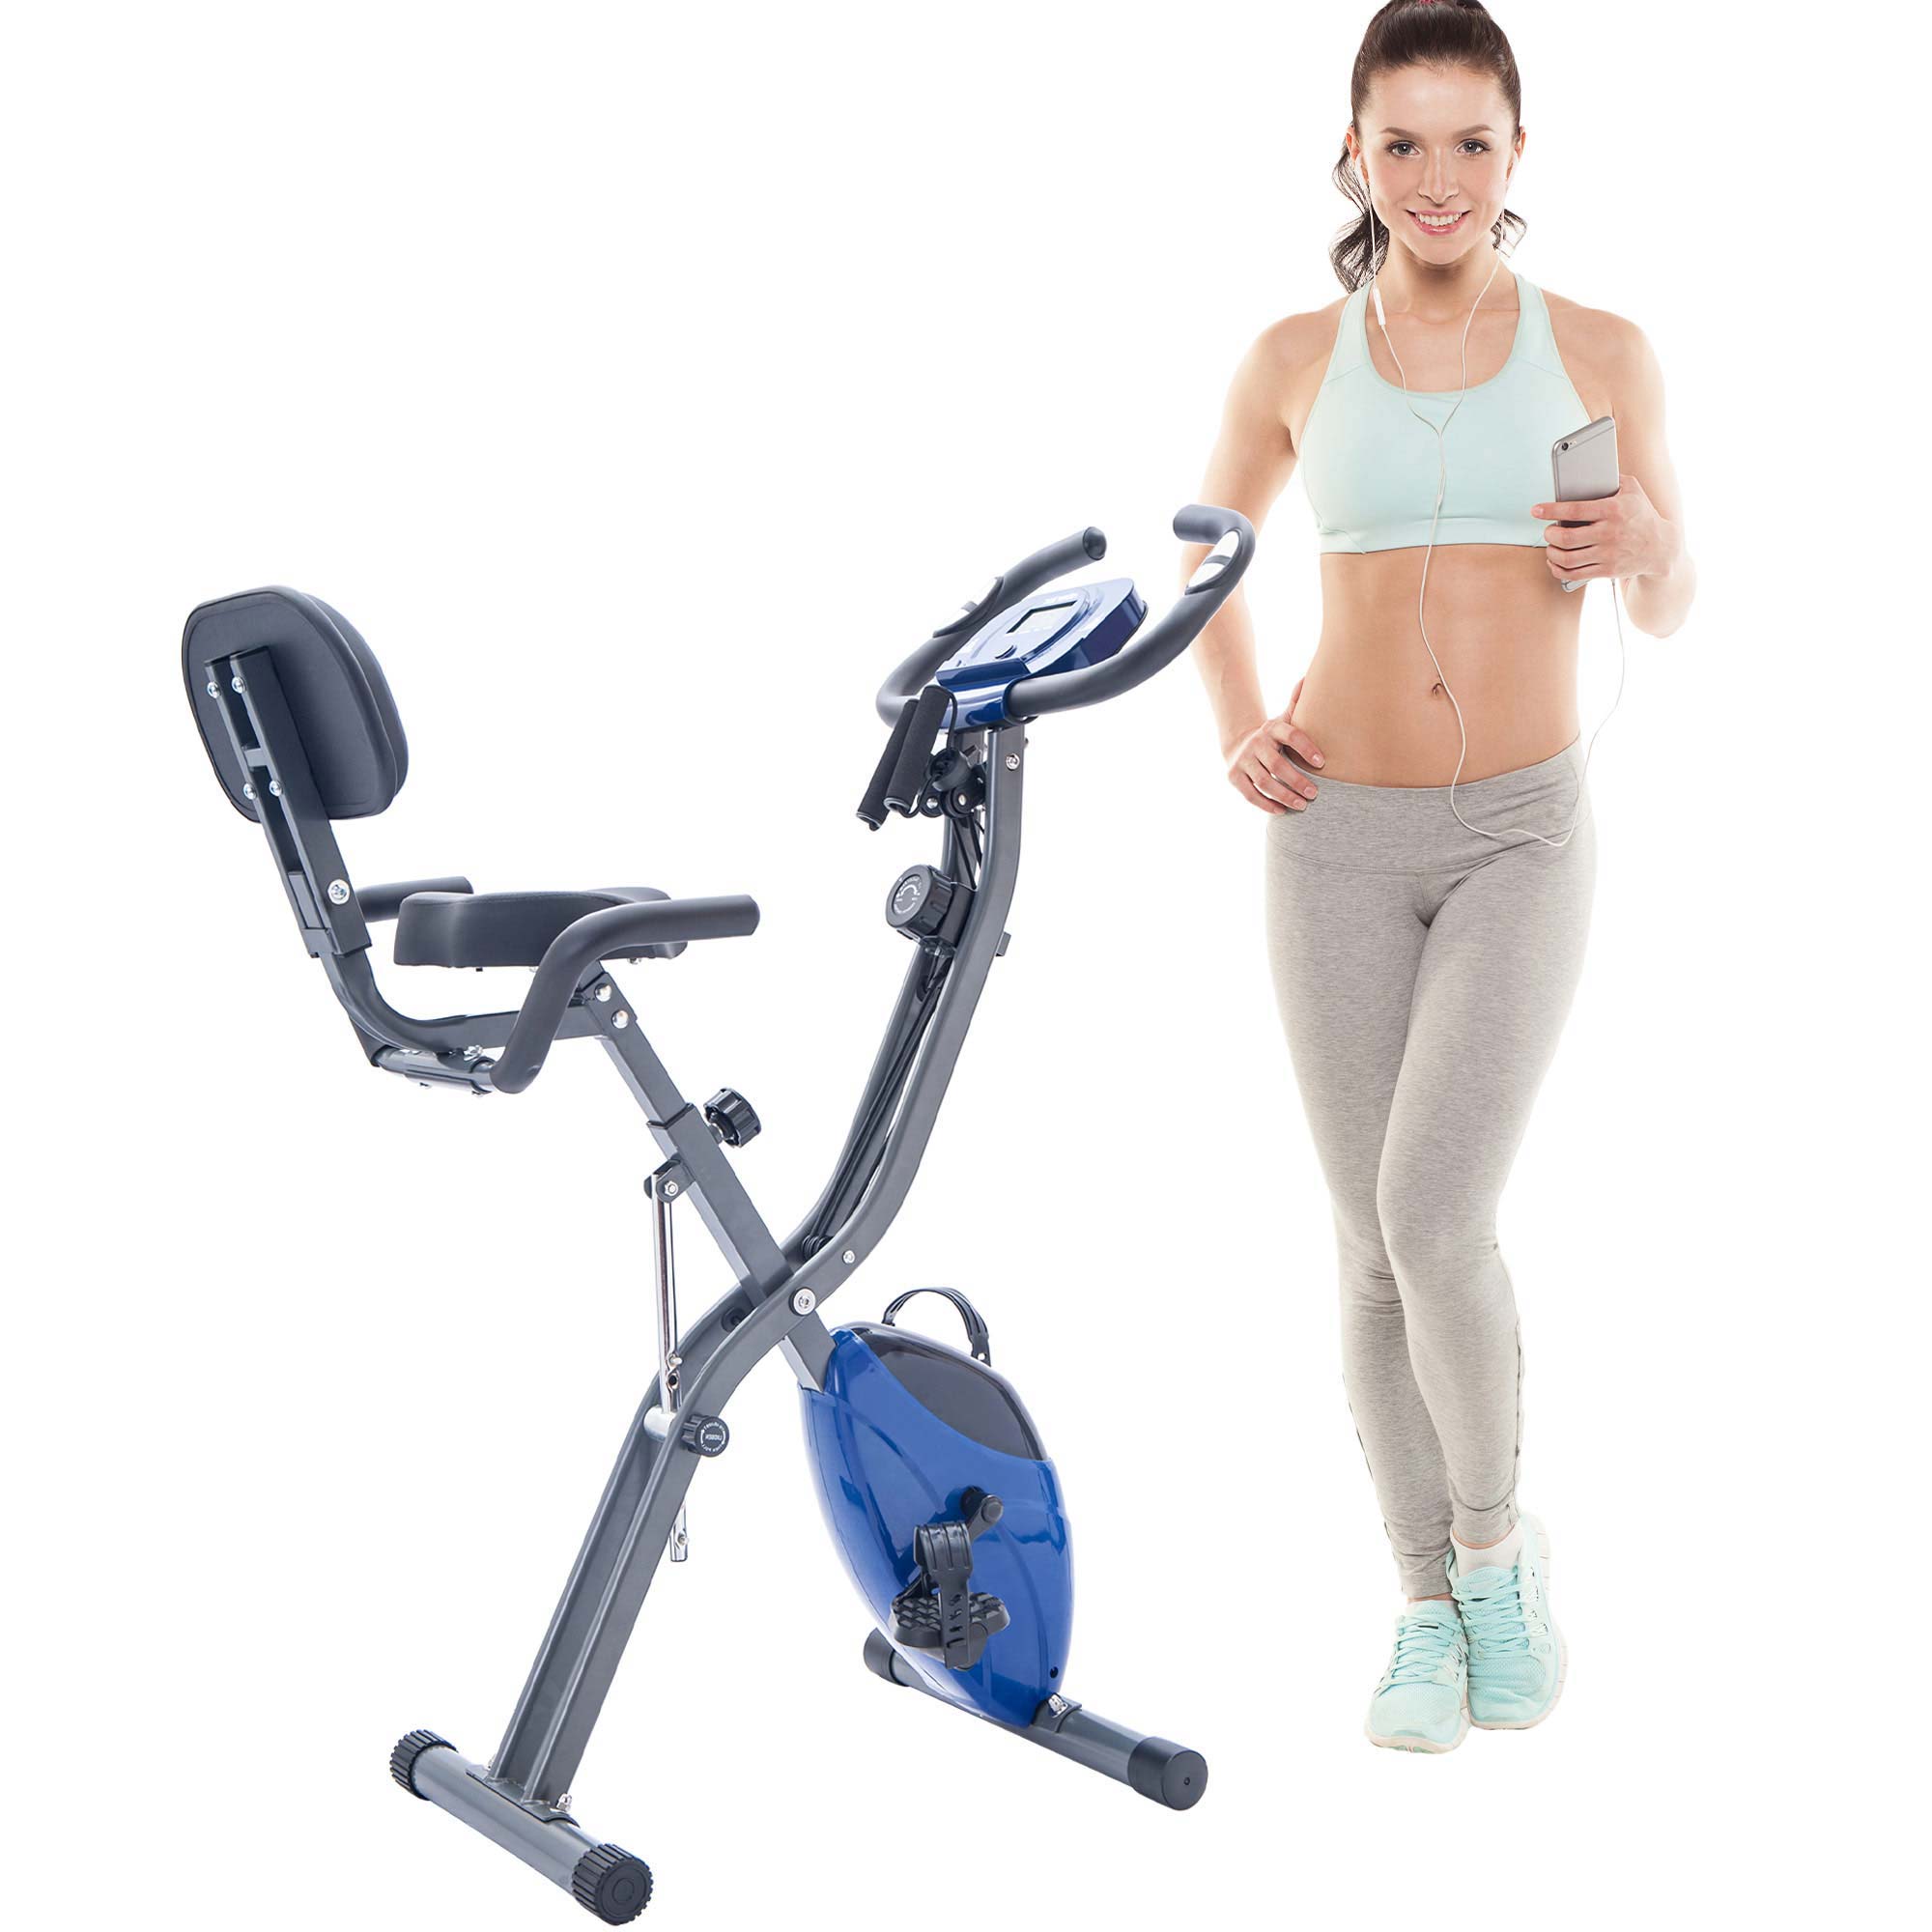 Blue Folding Exercise Bike, Sports Home Fitness Upright Recumbent X-Bike with 10-Level Adjustable Resistance - image 1 of 6